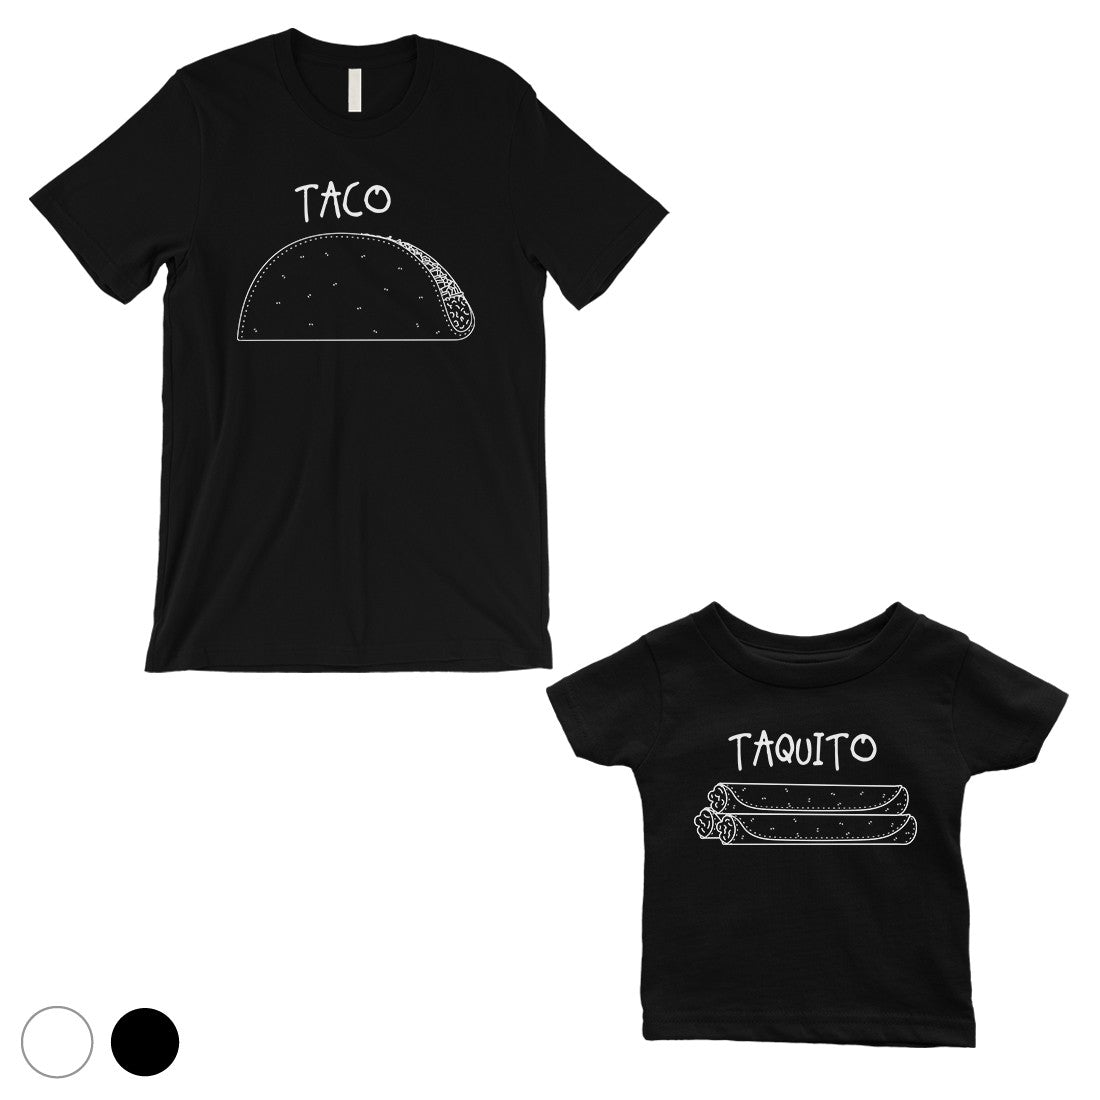 Taco Taquito Dad and Baby Matching Gift T-Shirts Black